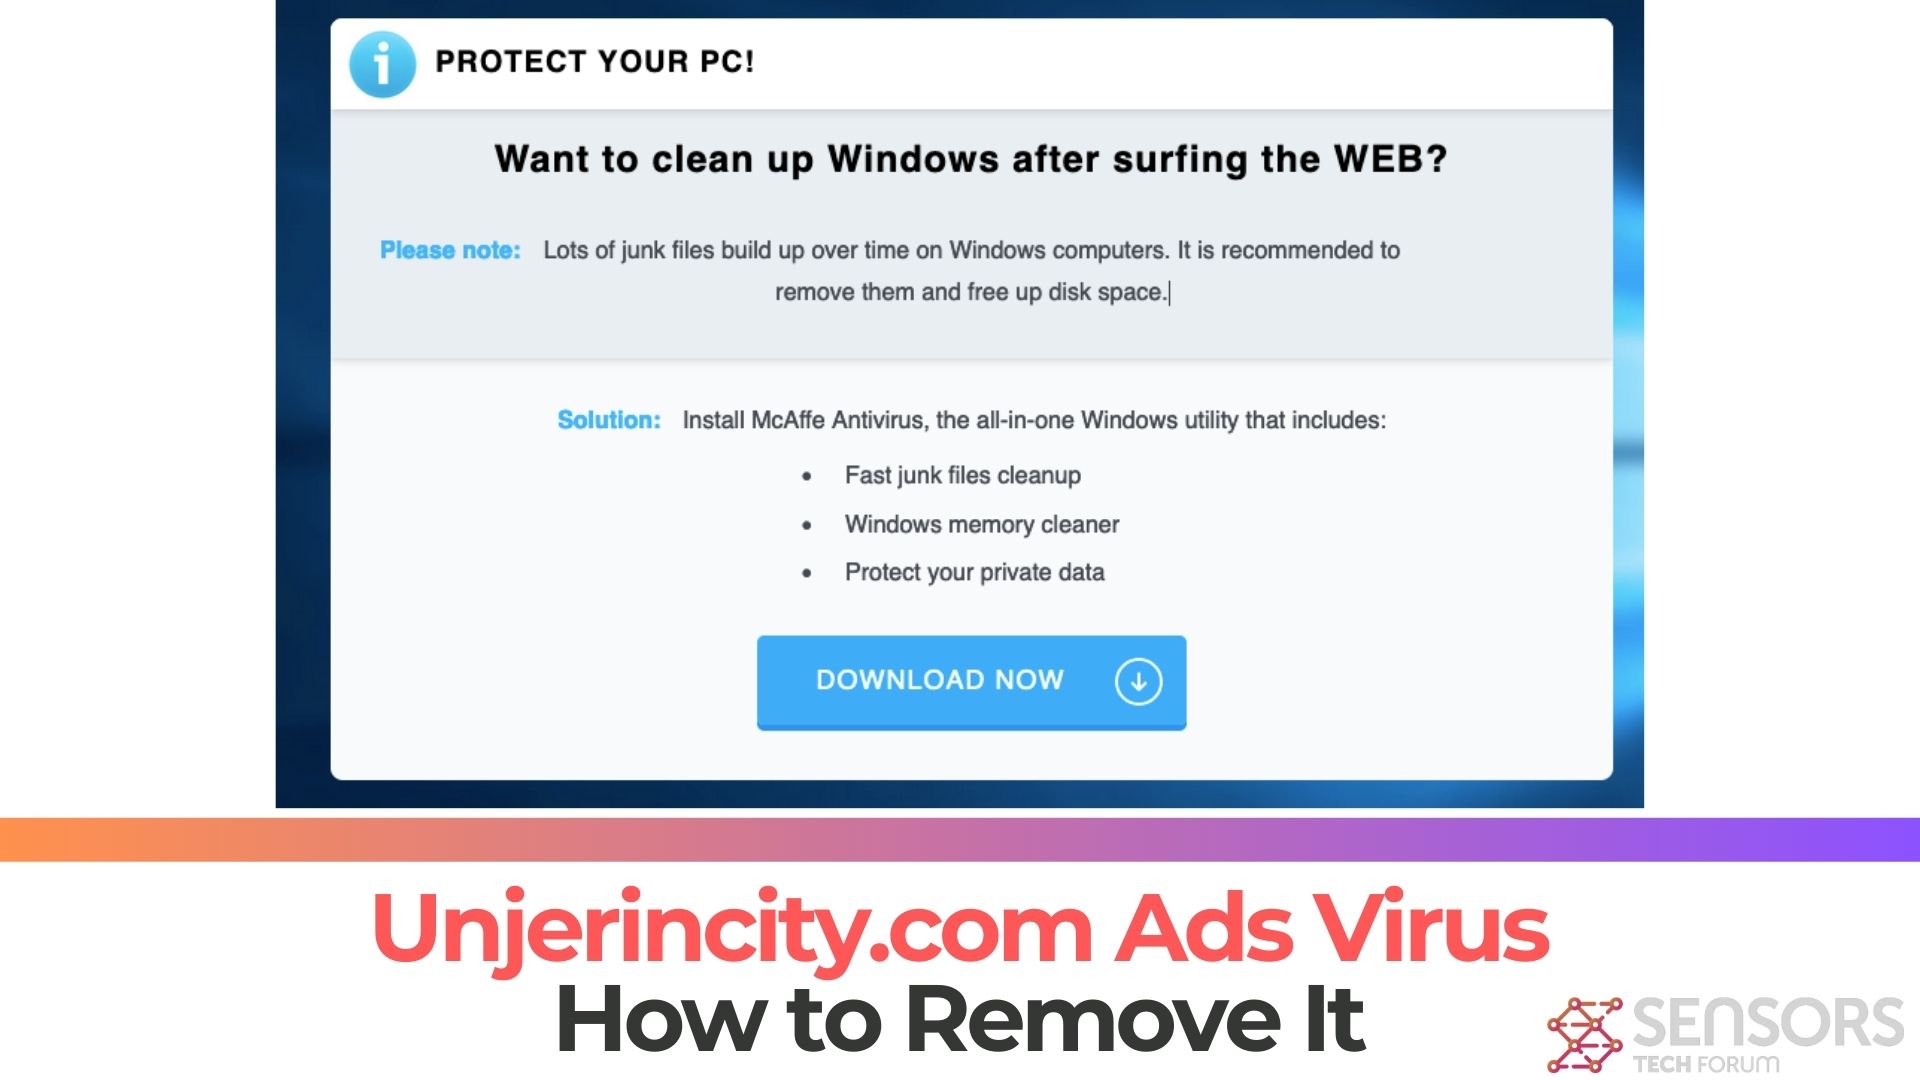 Unjerincity.com Redirect Ads Virus - How to Remove It?